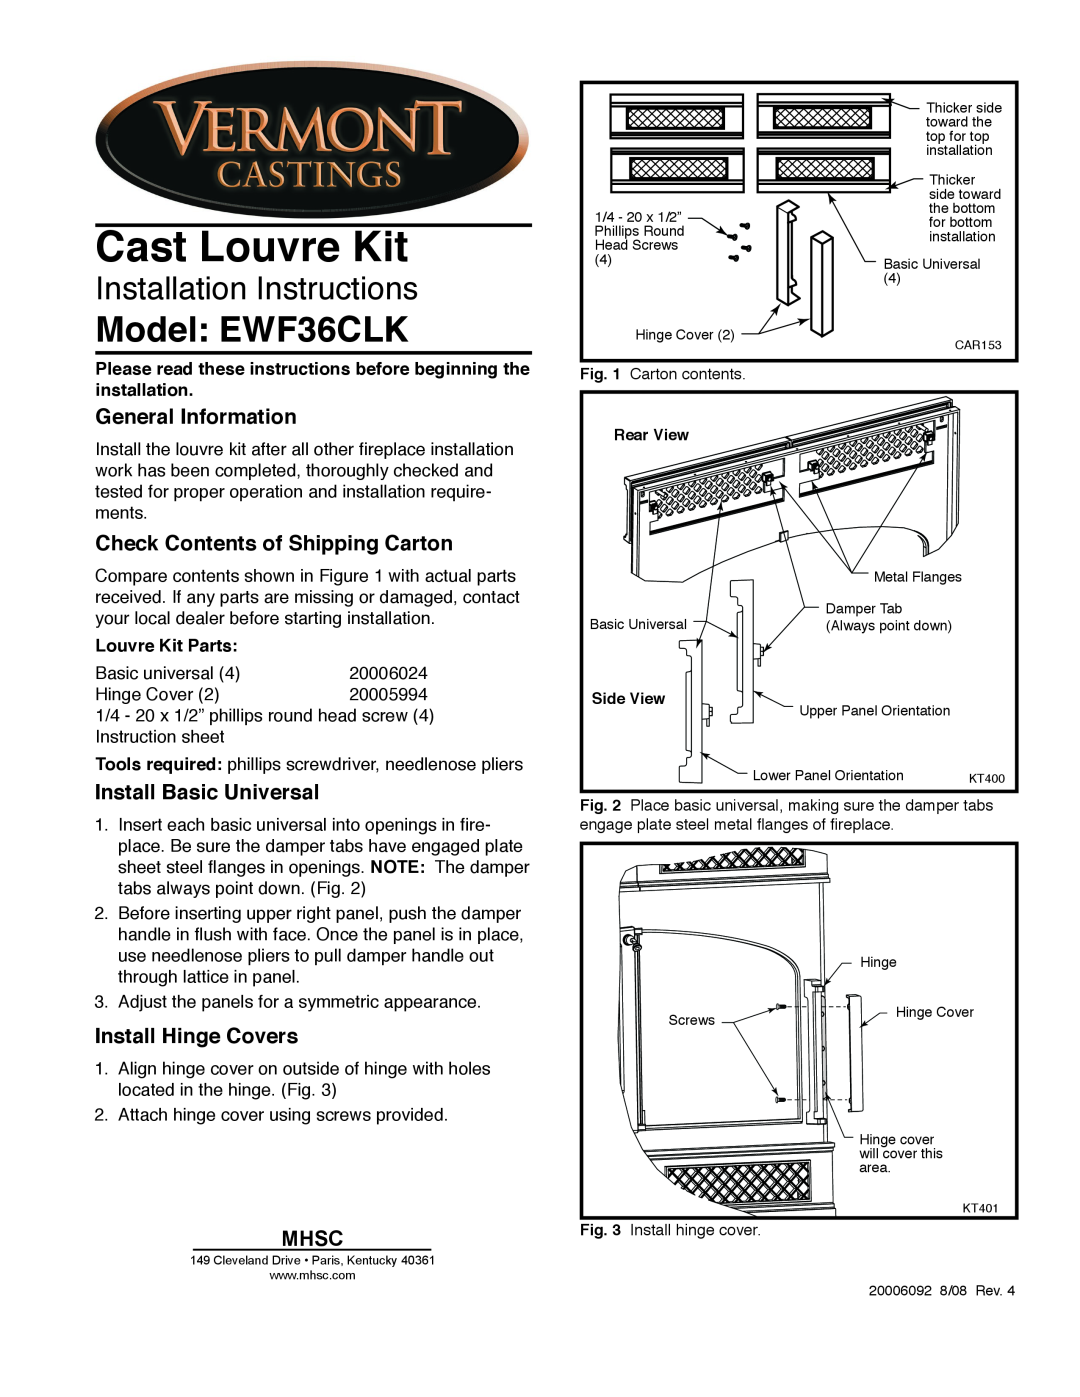 Vermont Casting installation instructions Cast Louvre Kit, Model EWF36CLK, Installation Instructions, Mhsc 